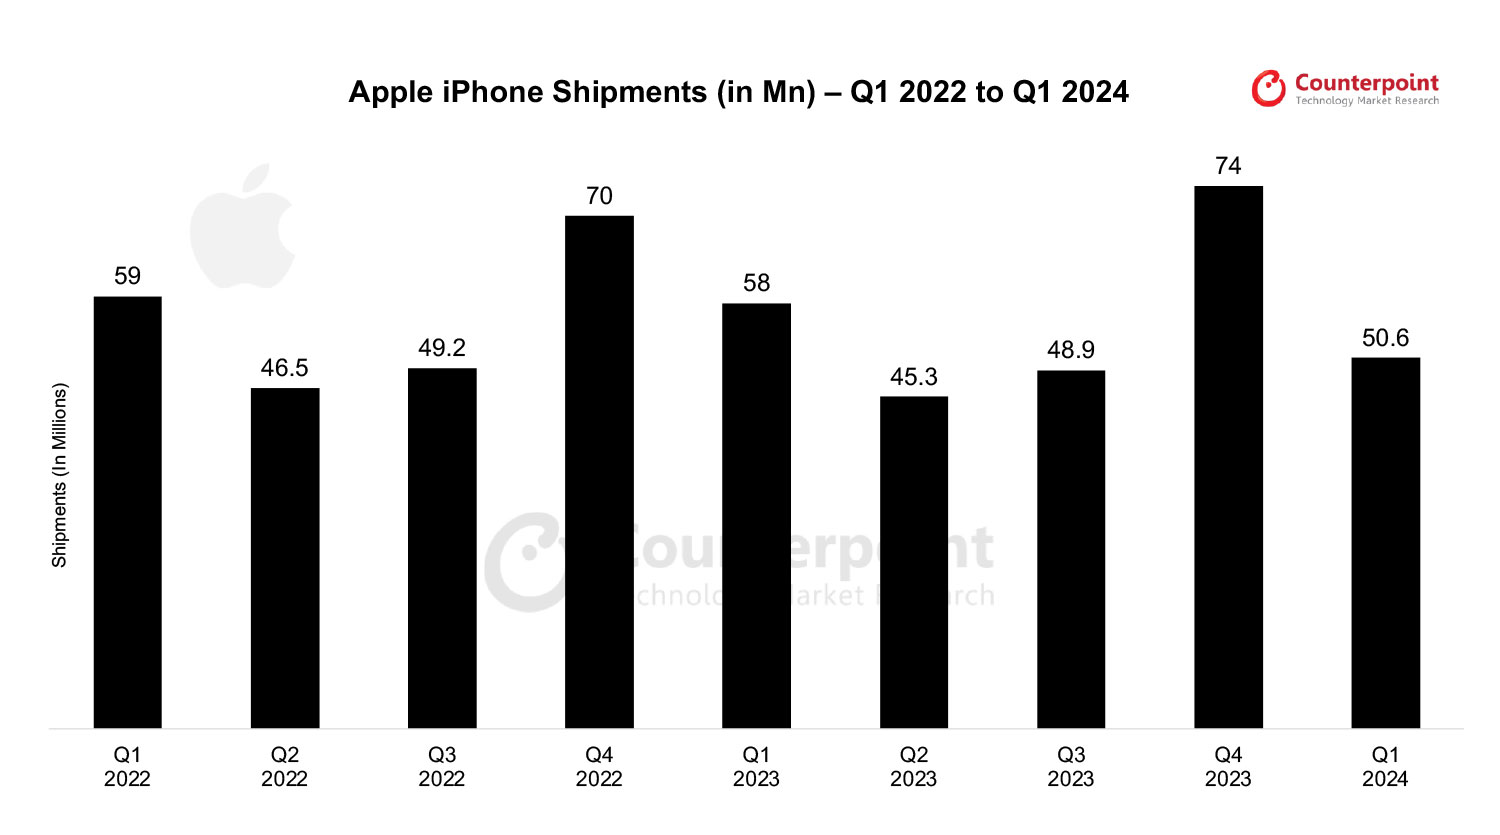 Apple-iPhone-Market-Shipments-by-Quarter-Q1-2024